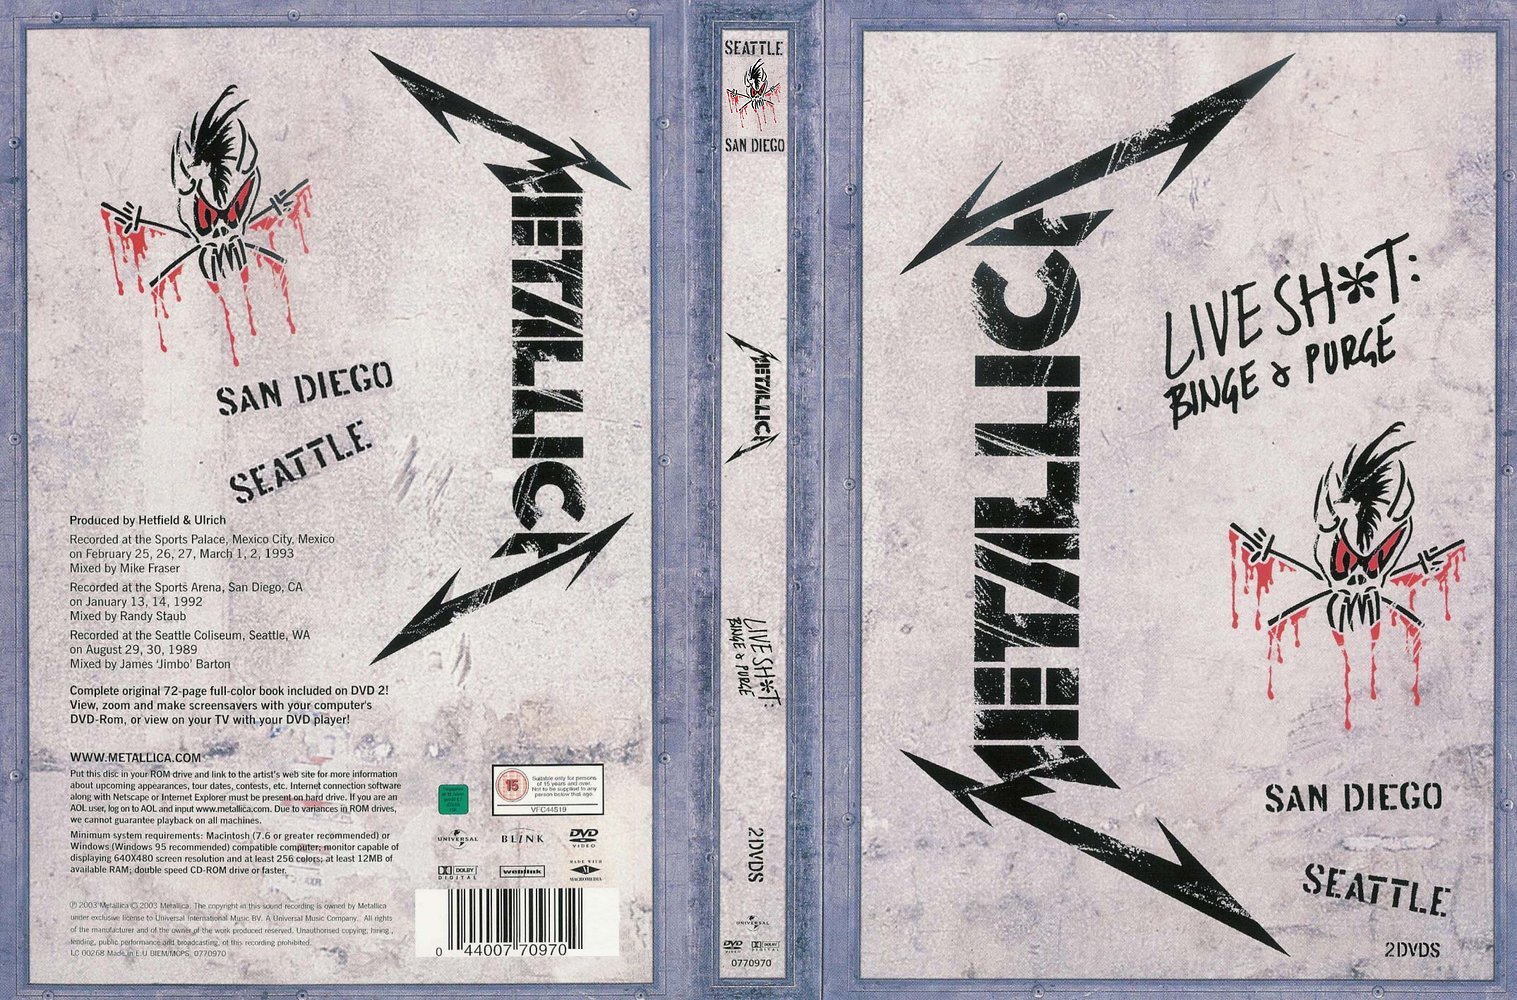 Jaquette DVD Metallica Live Shit Binge And Purge